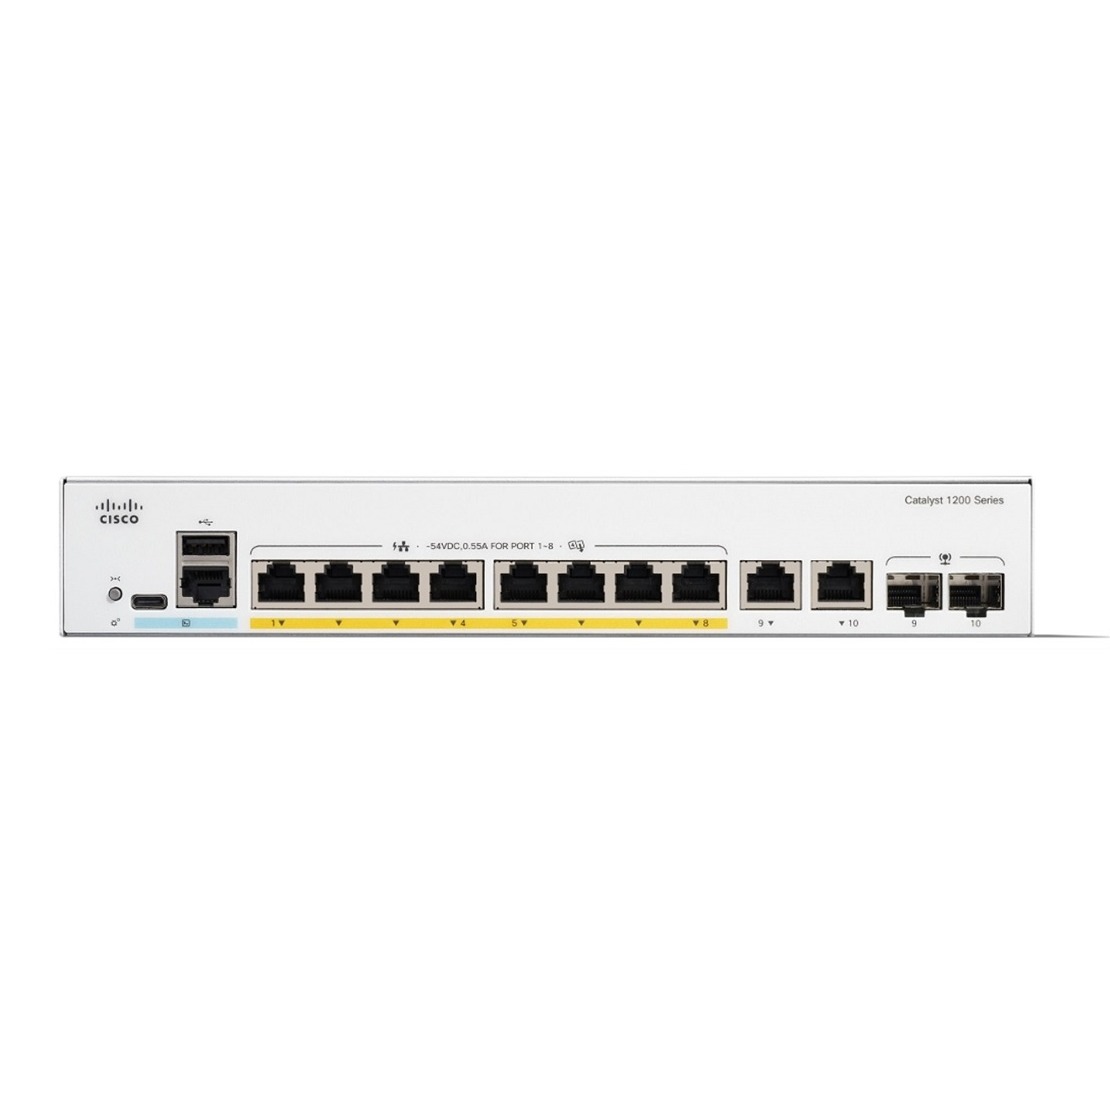 Cisco catalyst C1200-8P,  8 ports gigabit POE+ 67W + 2 x 1G SFP and RJ-45 combo uplink ports switch